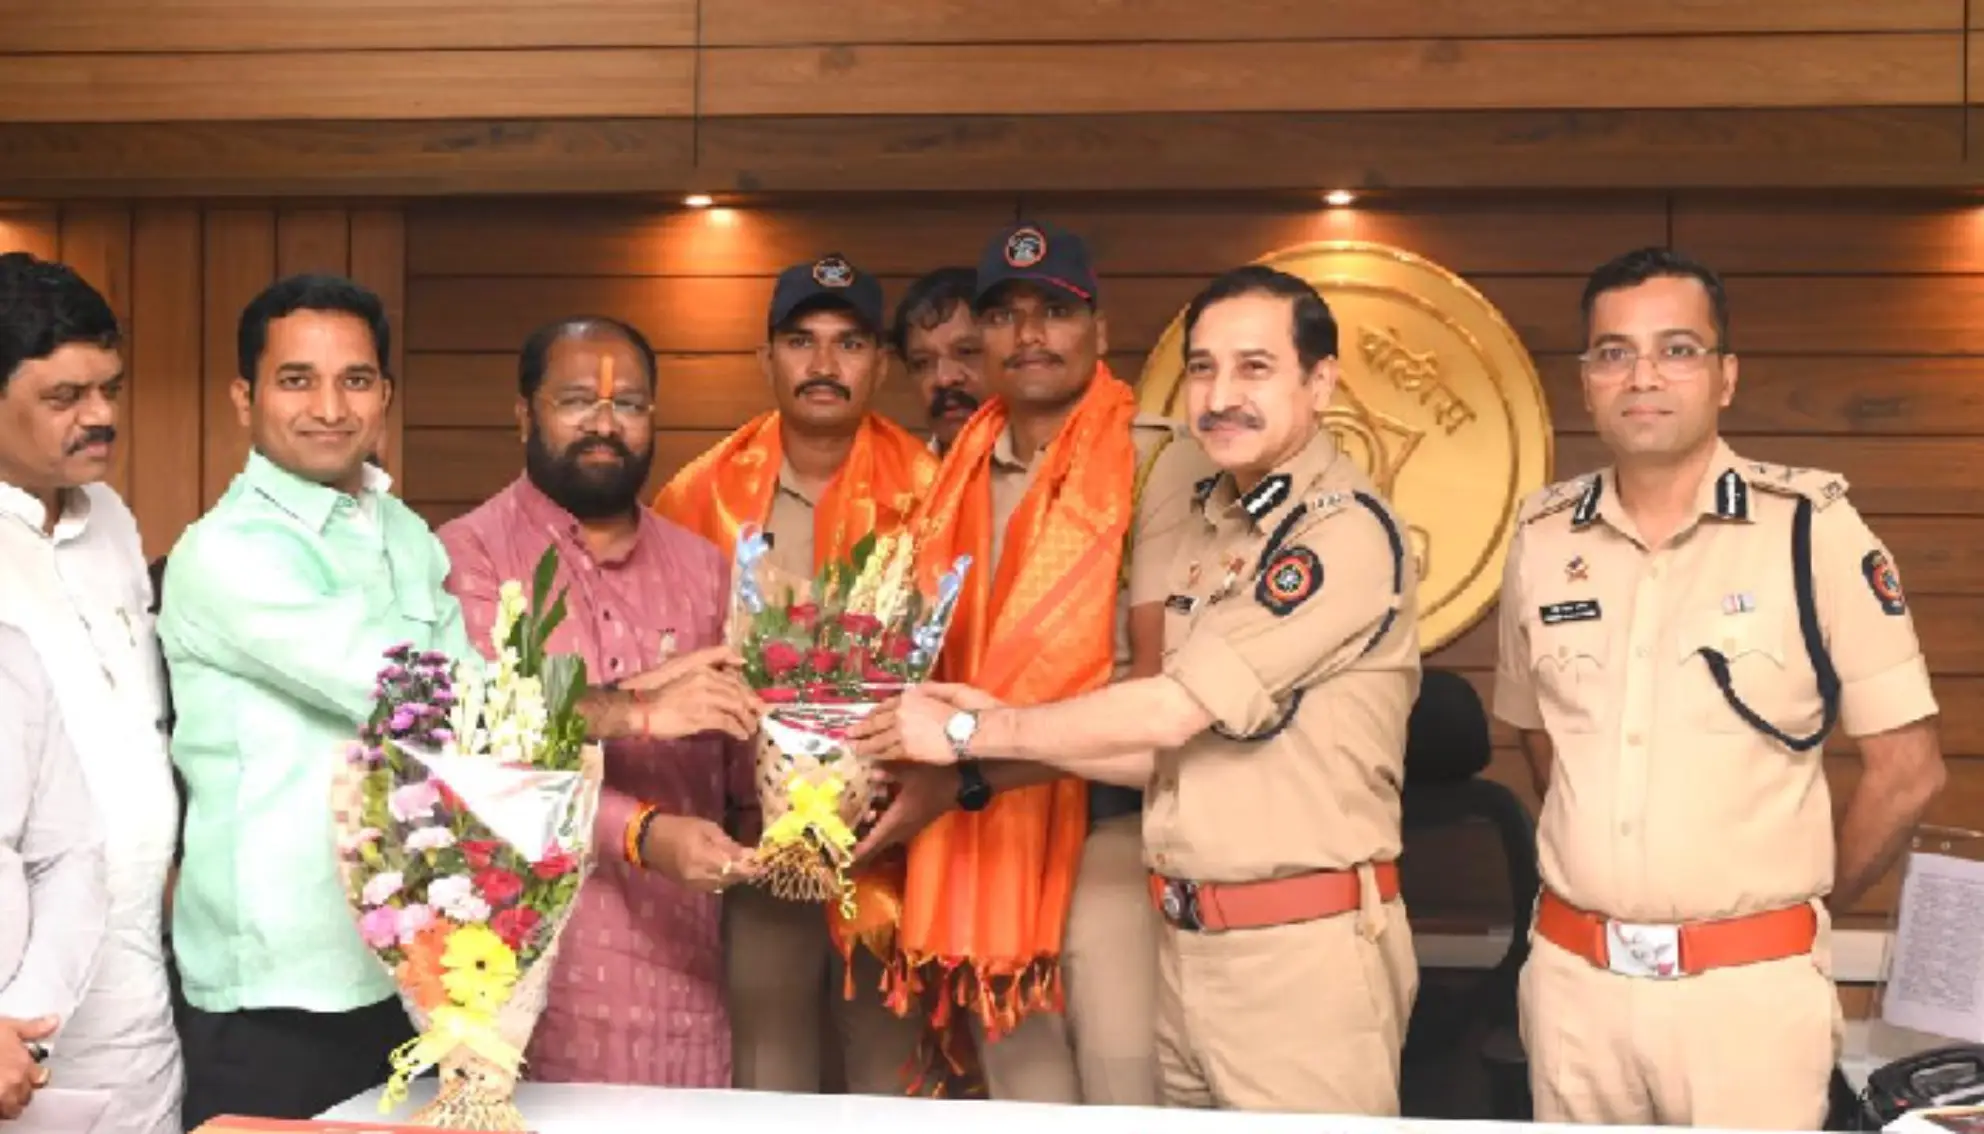 Pune BJP felicitated Pune Police On behalf of Bharatiya Janata Party, Pune City felicitated police officers Pradeep Chavan and Amol Nazan